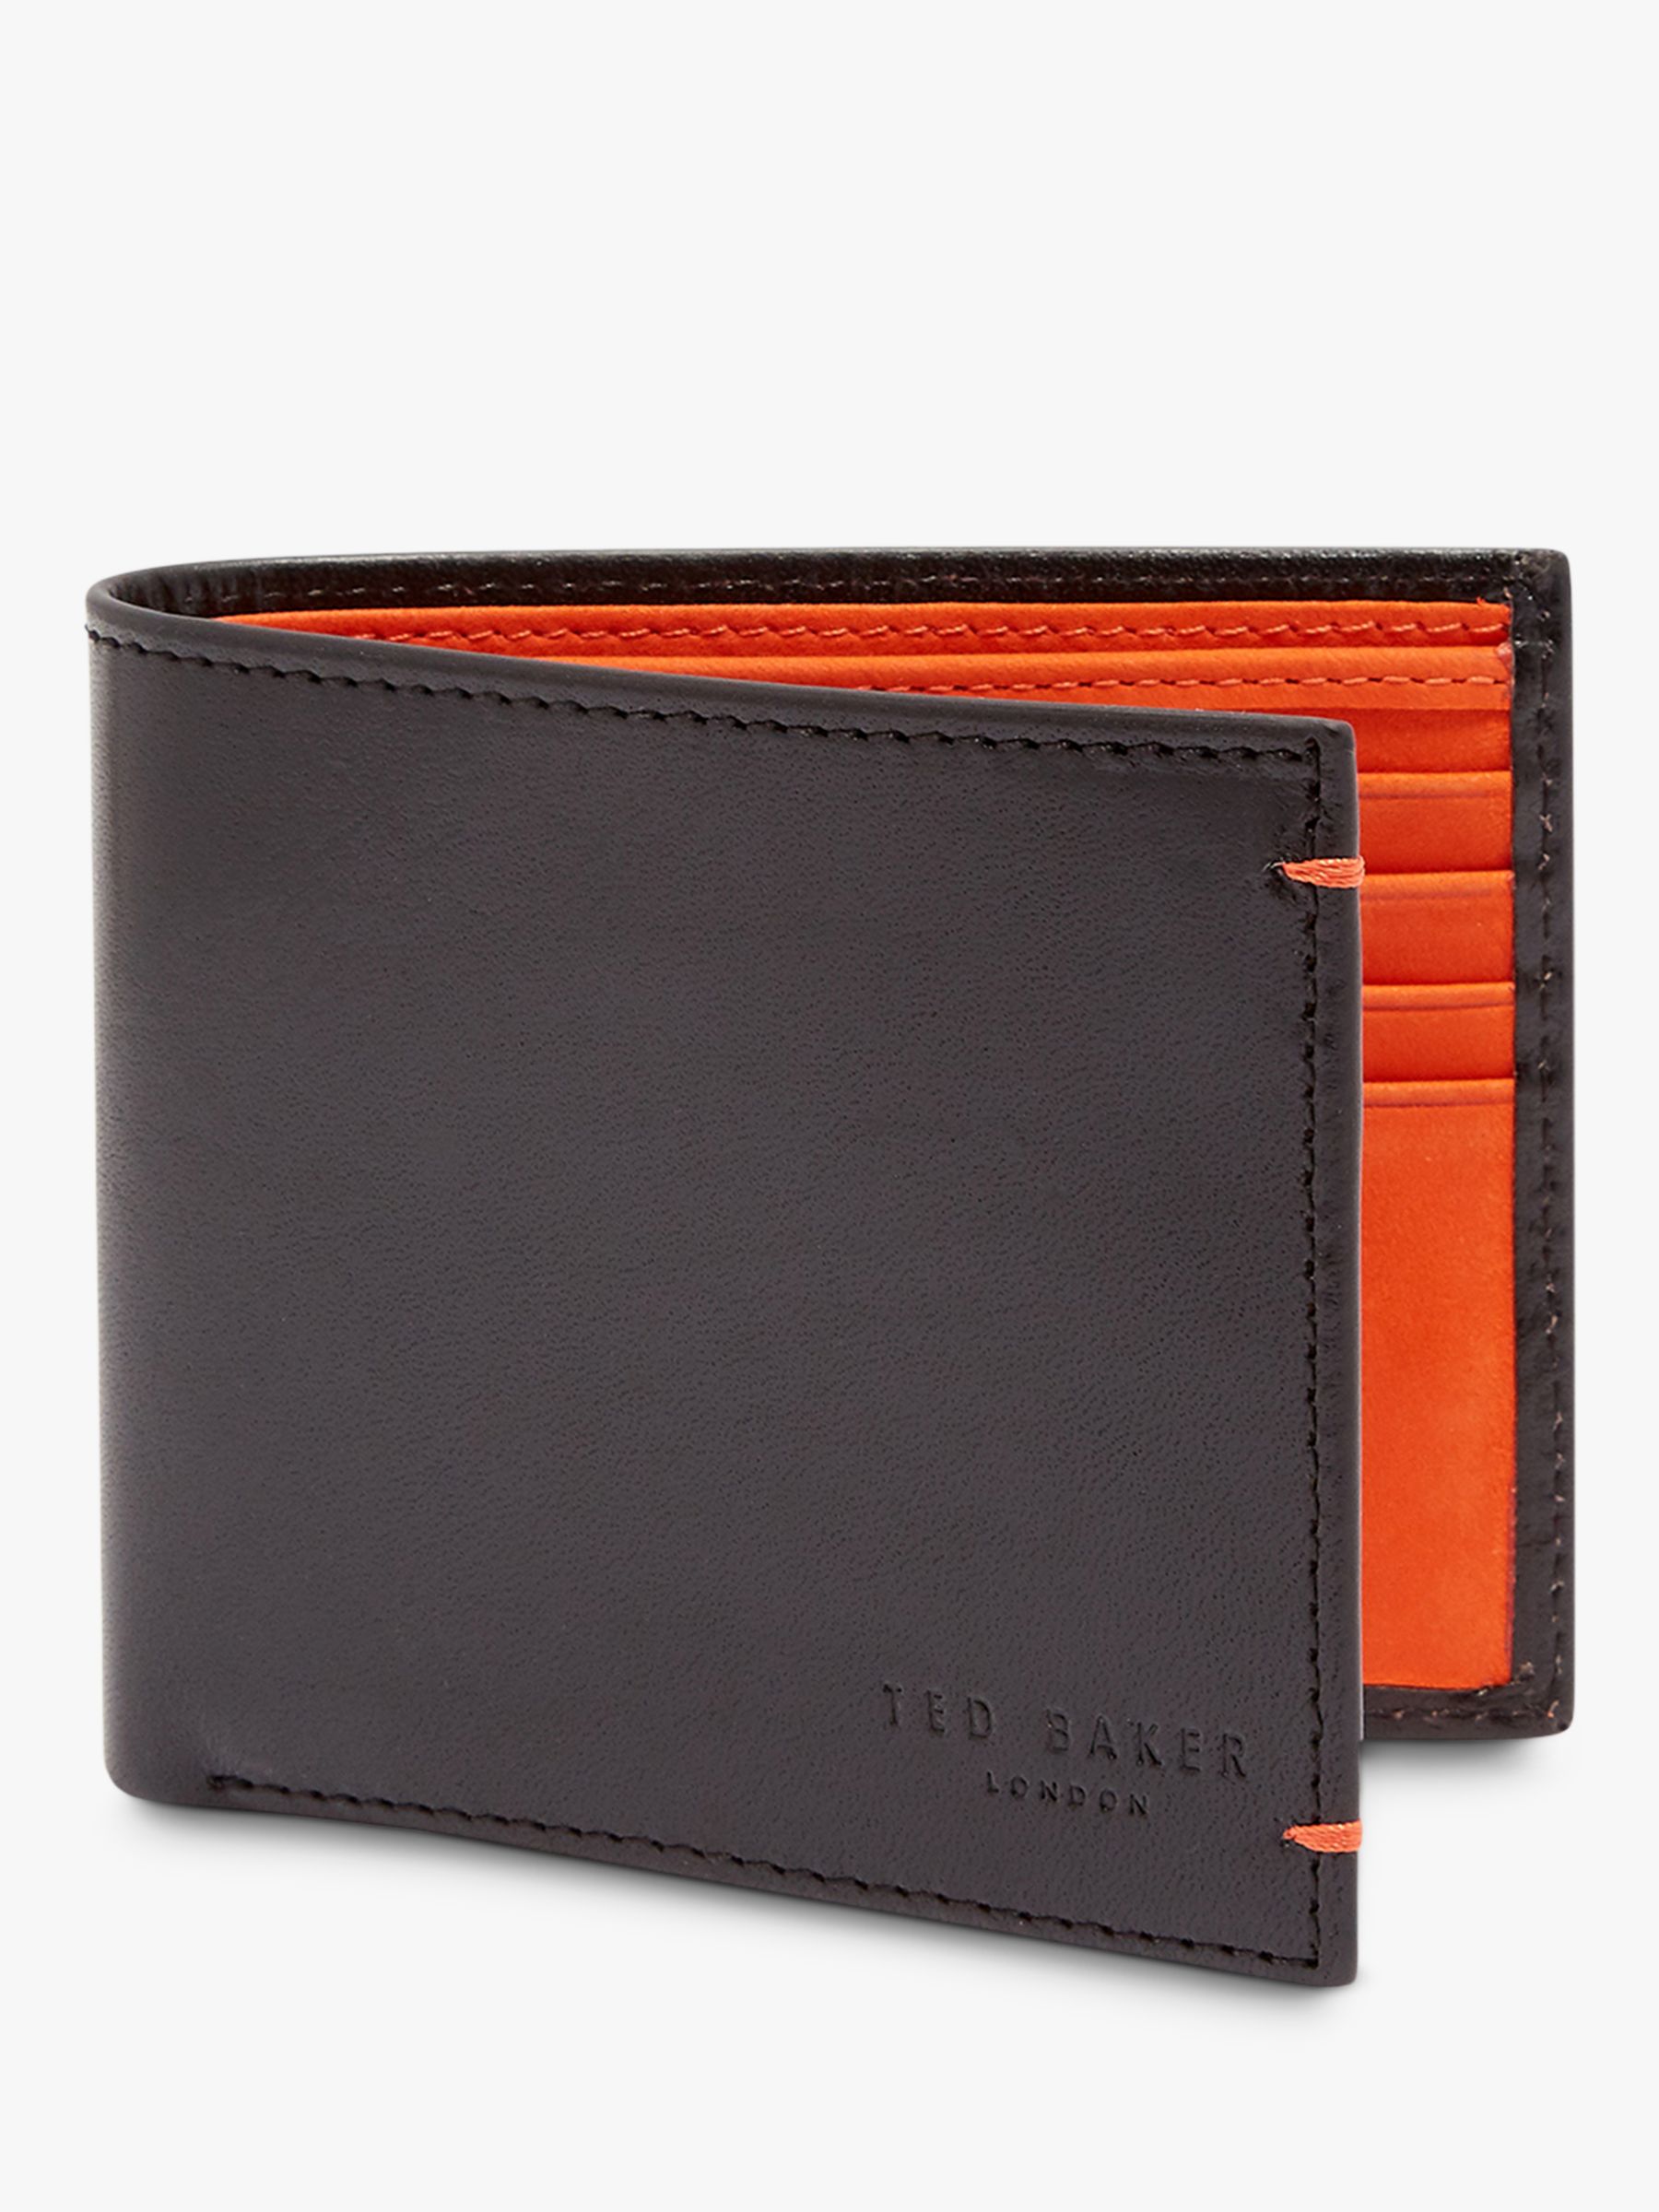 Ted Baker Logans Leather Bifold Wallet at John Lewis & Partners